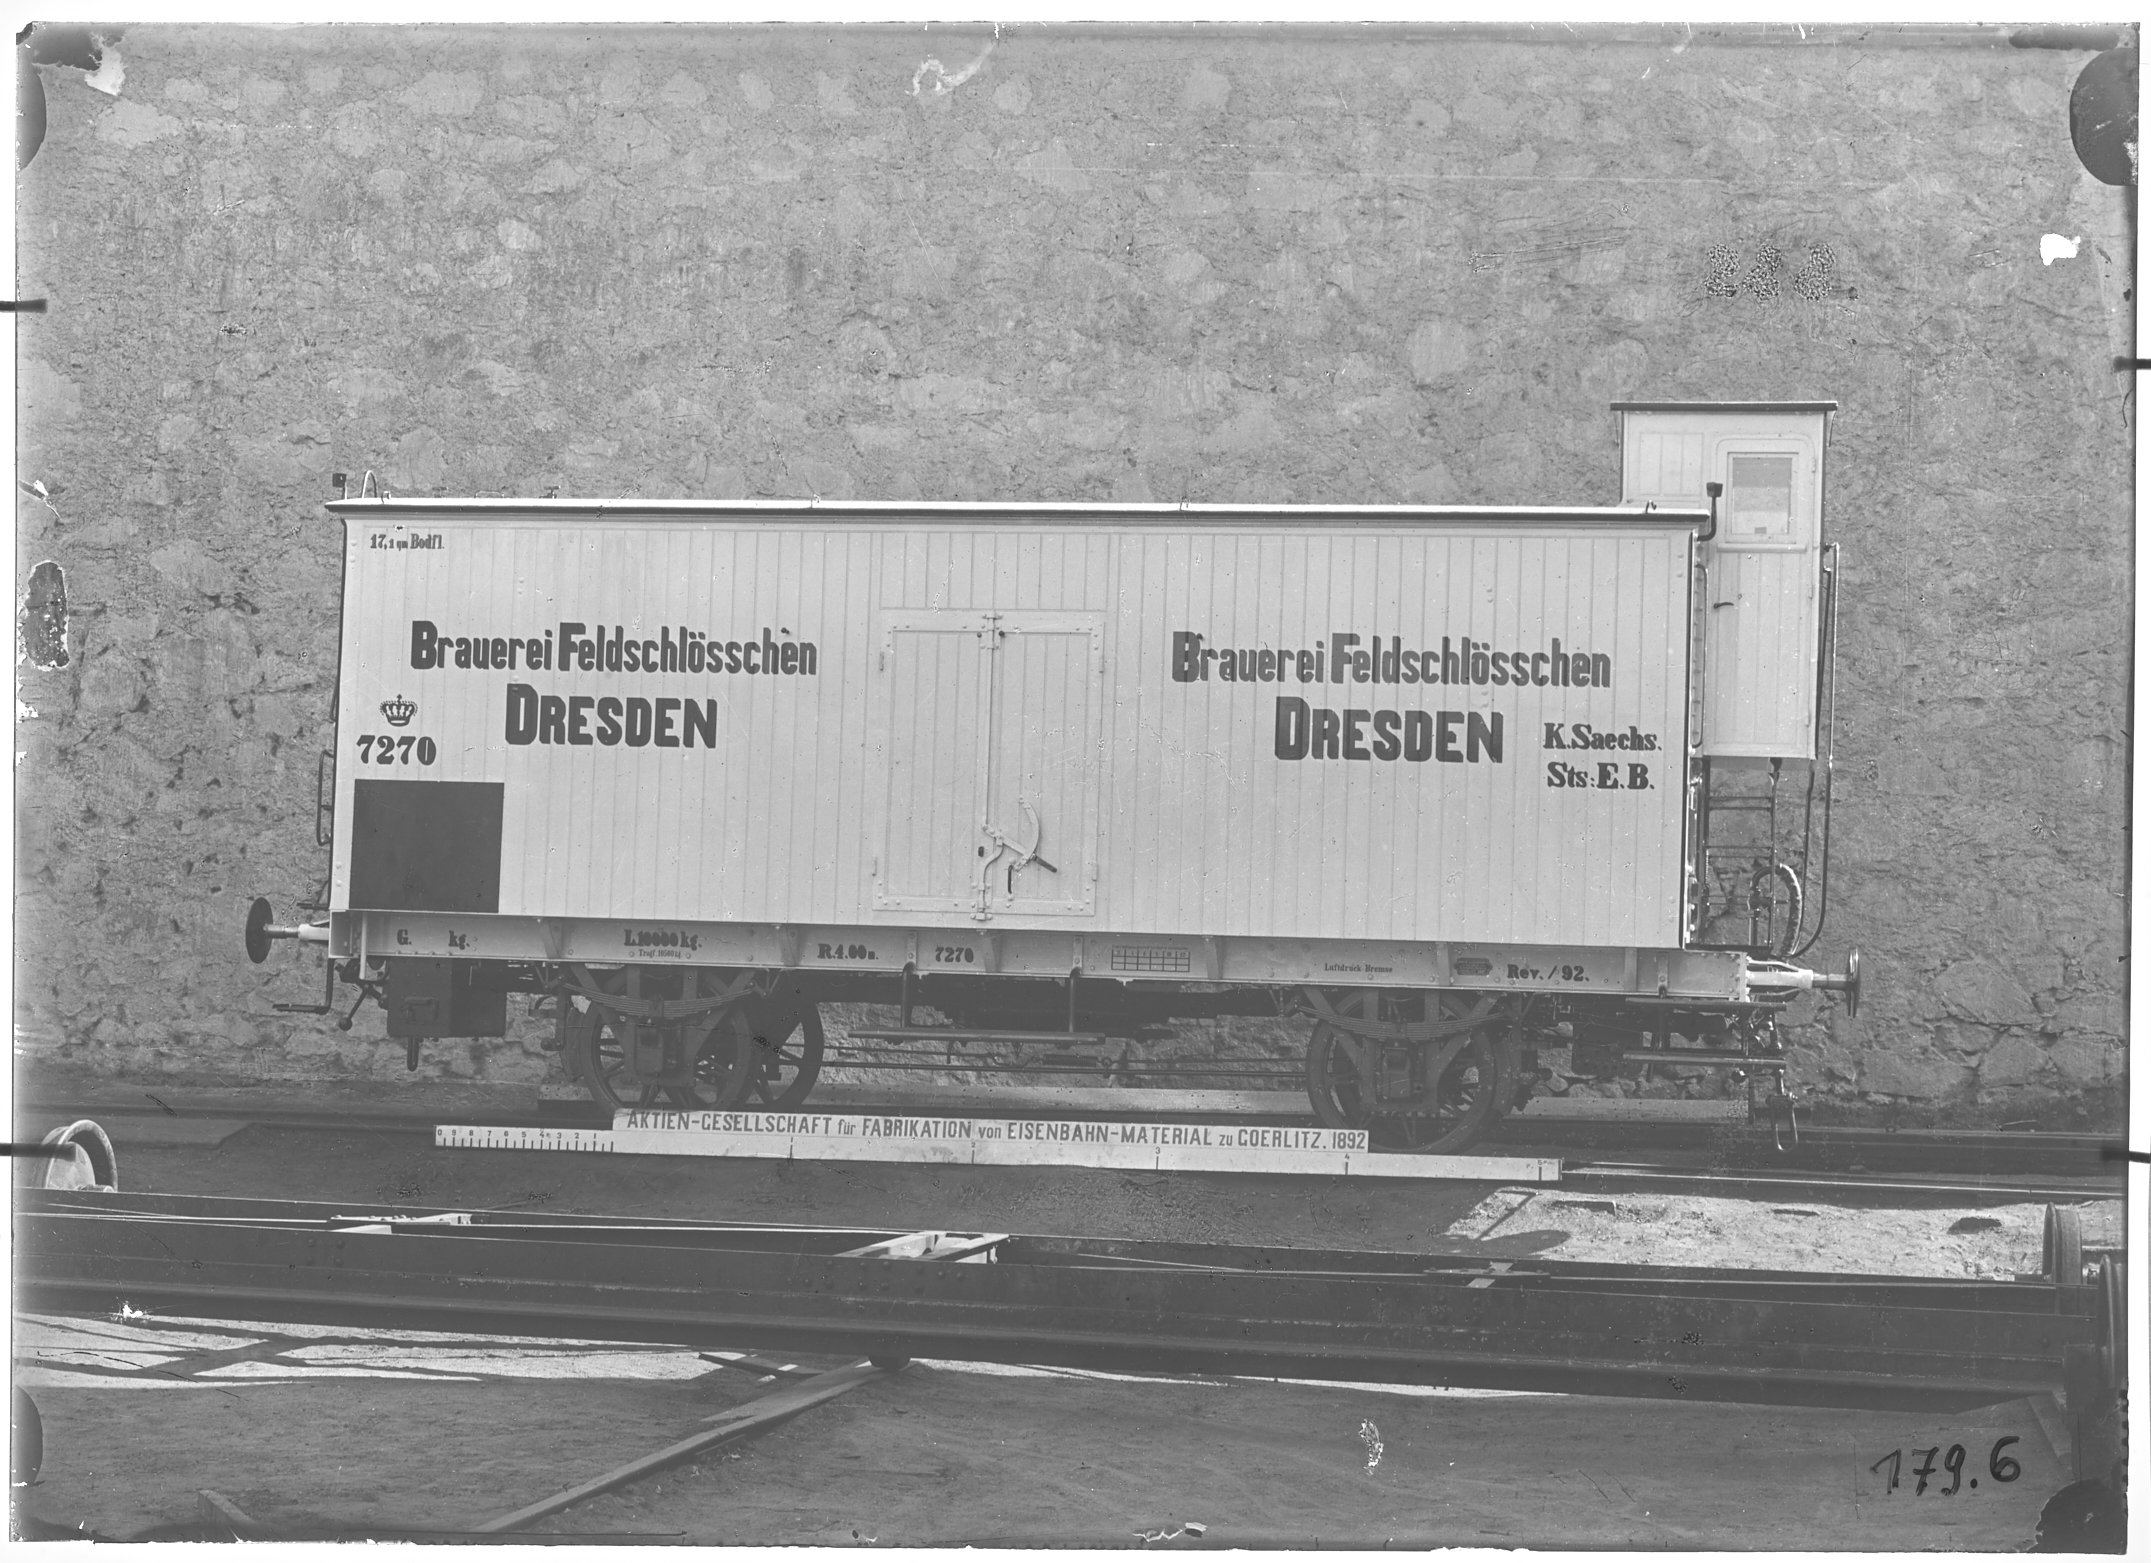 Fotografie: zweiachsiger Biertransportwagen mit Bremserhaus (Längsansicht), 1892. Brauerei Feldschlösschen Dresden (Verkehrsmuseum Dresden CC BY-NC-SA)